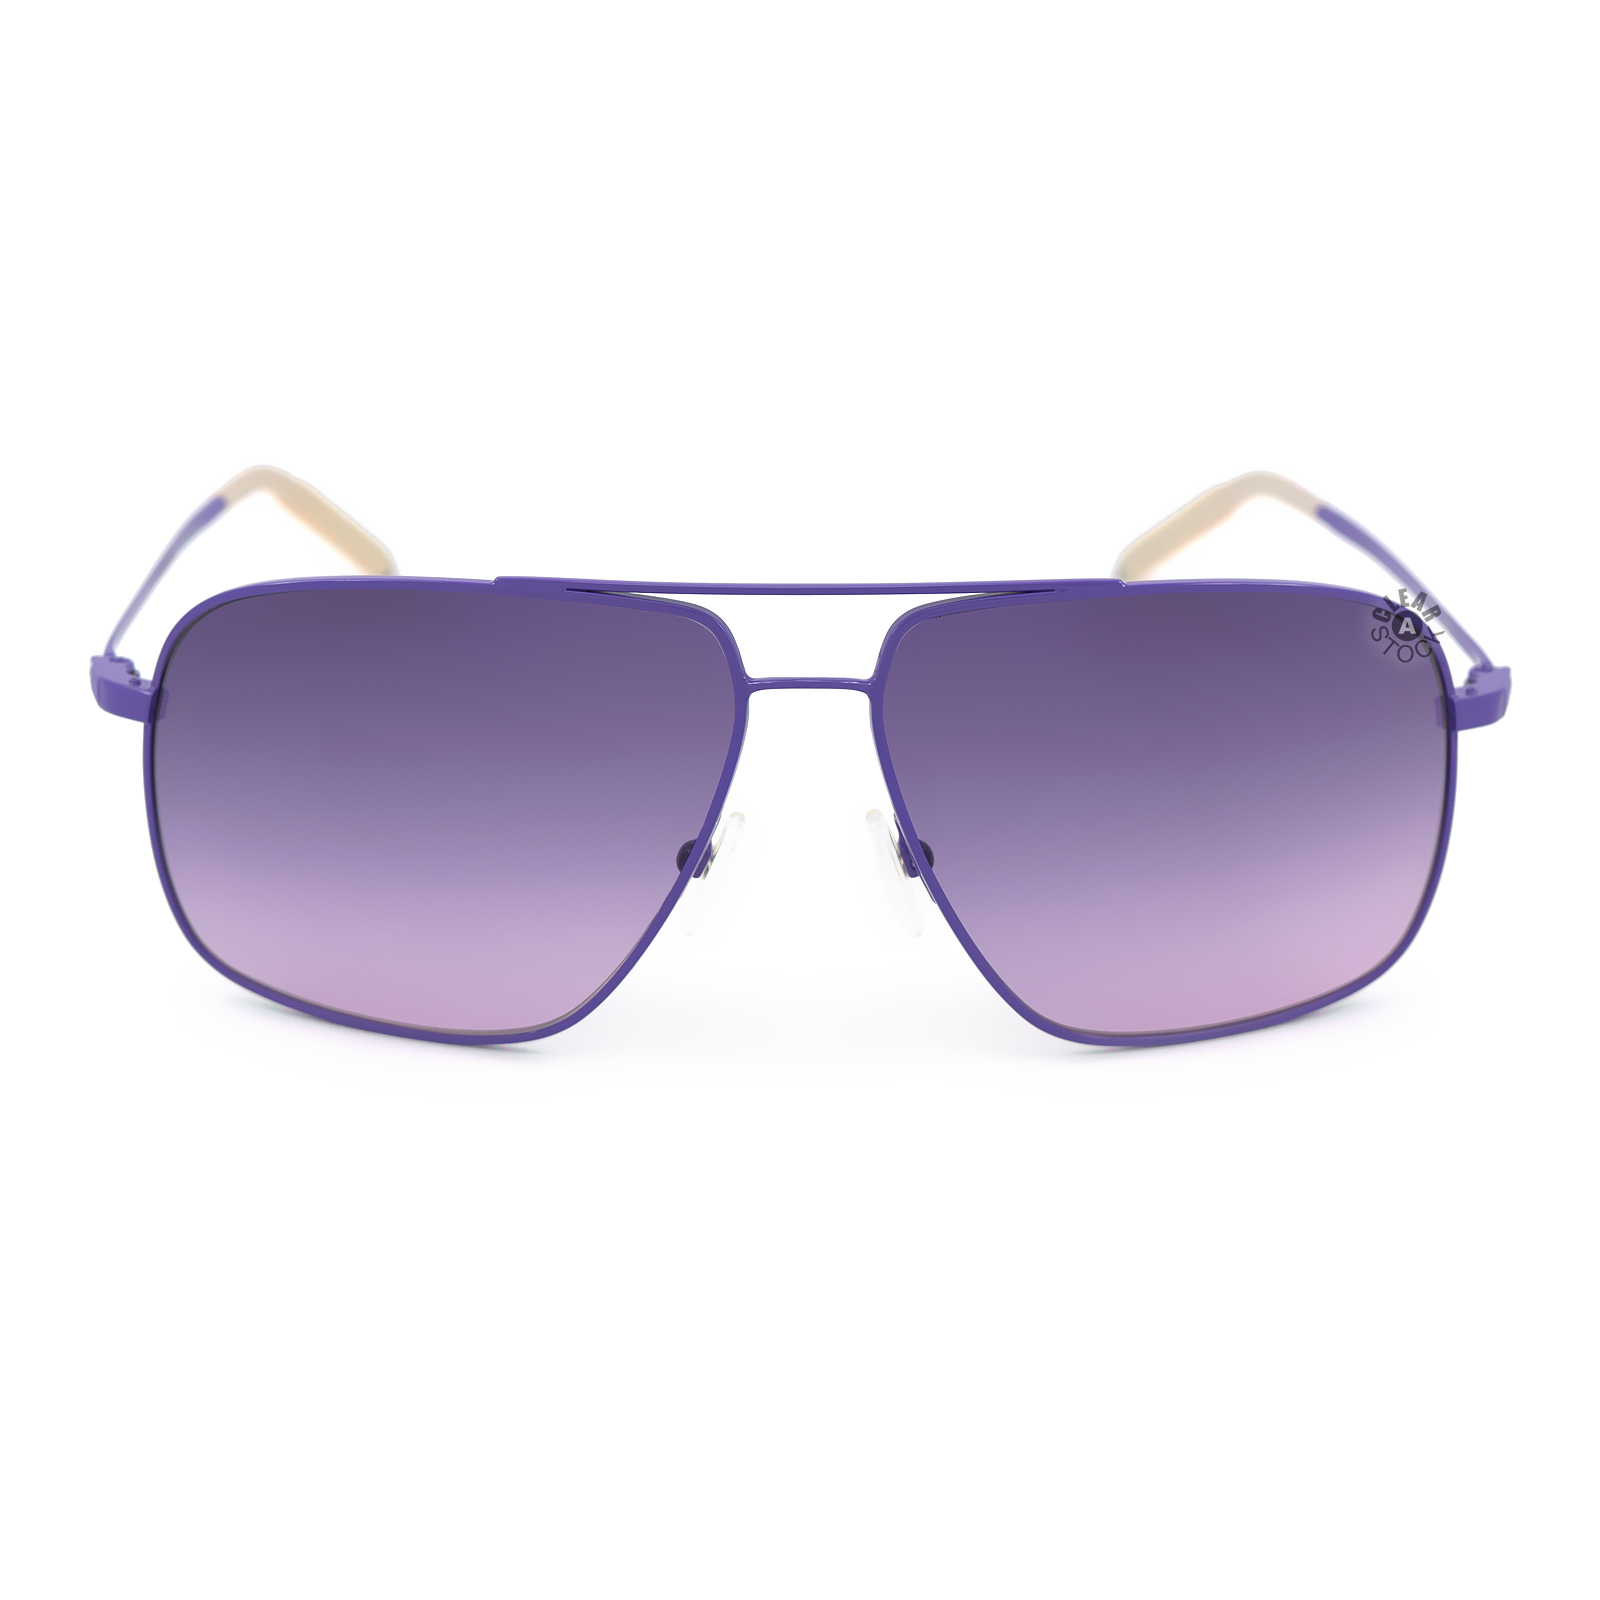 Mosley Tribes Sunglasses Price Factory Sale, 53% OFF | centro-innato.com